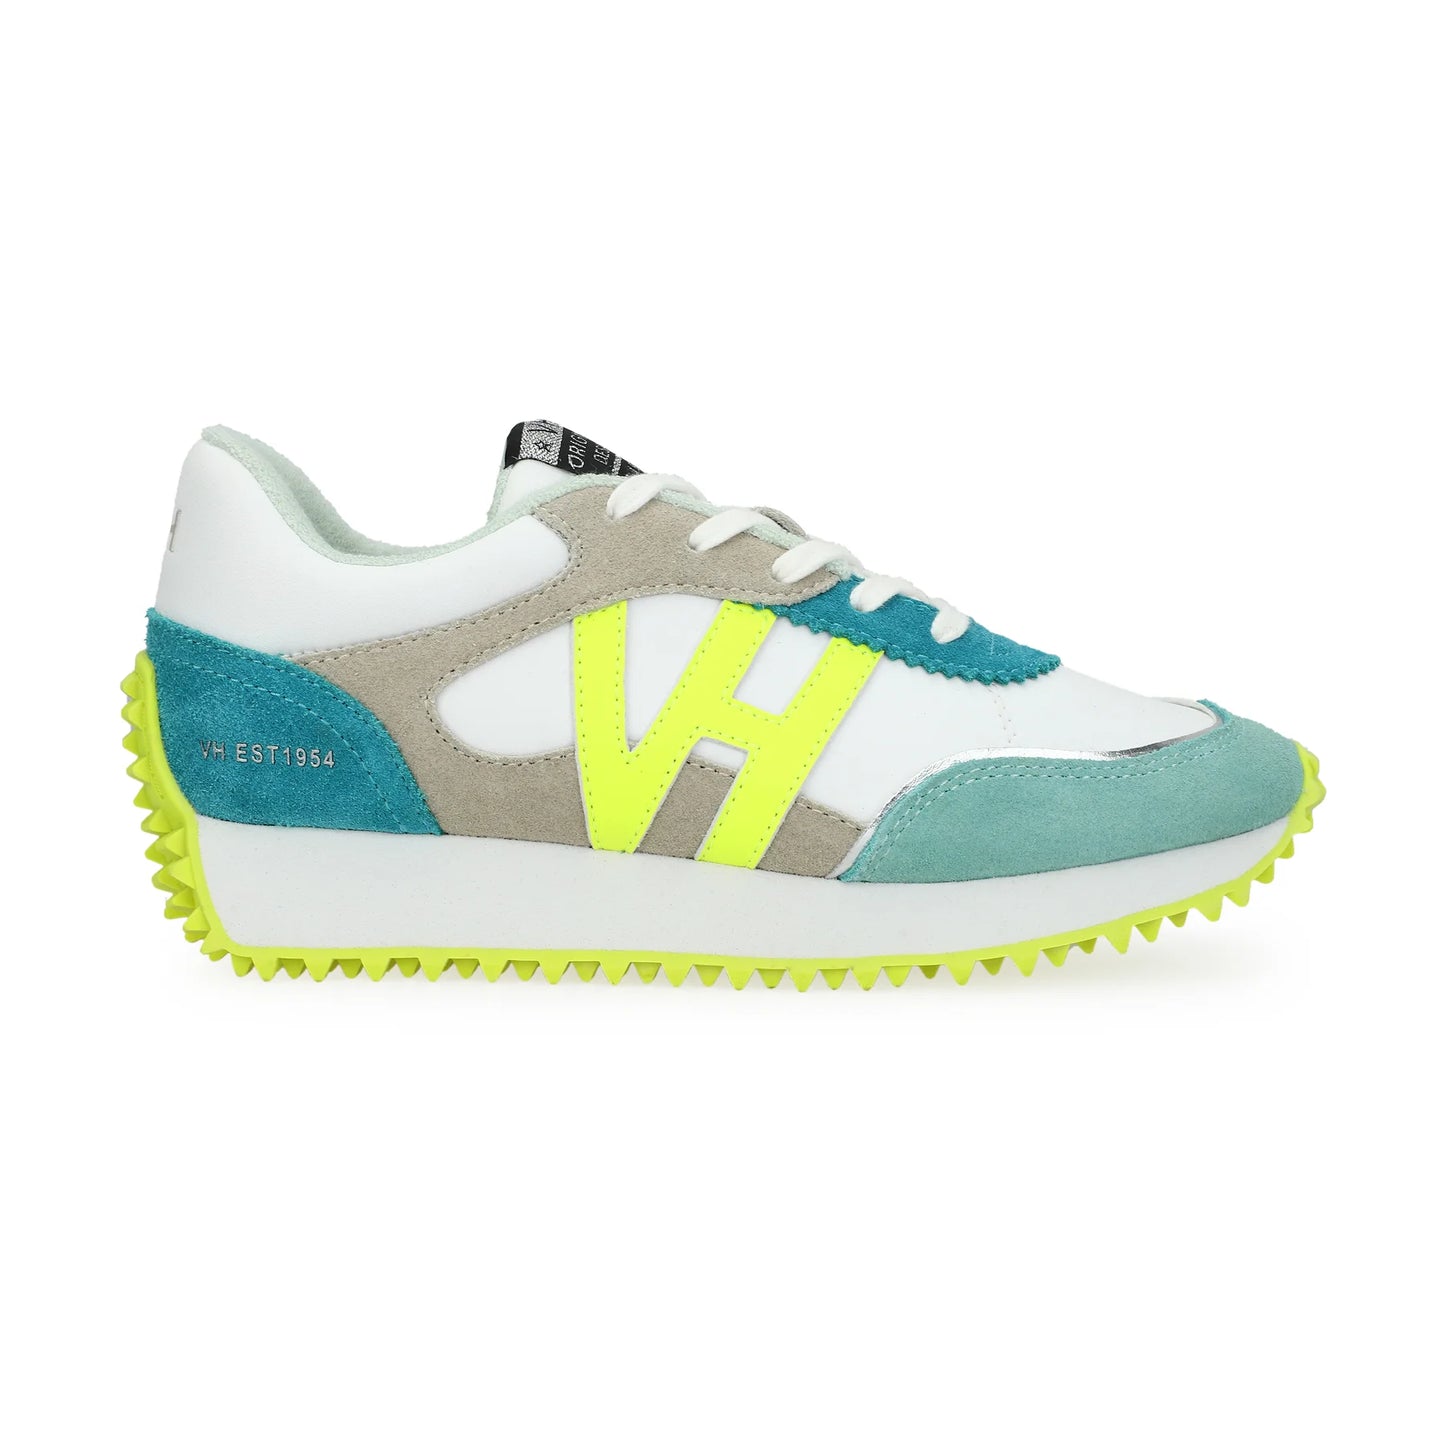 Cosmic 5 Neon Yellow Sneakers